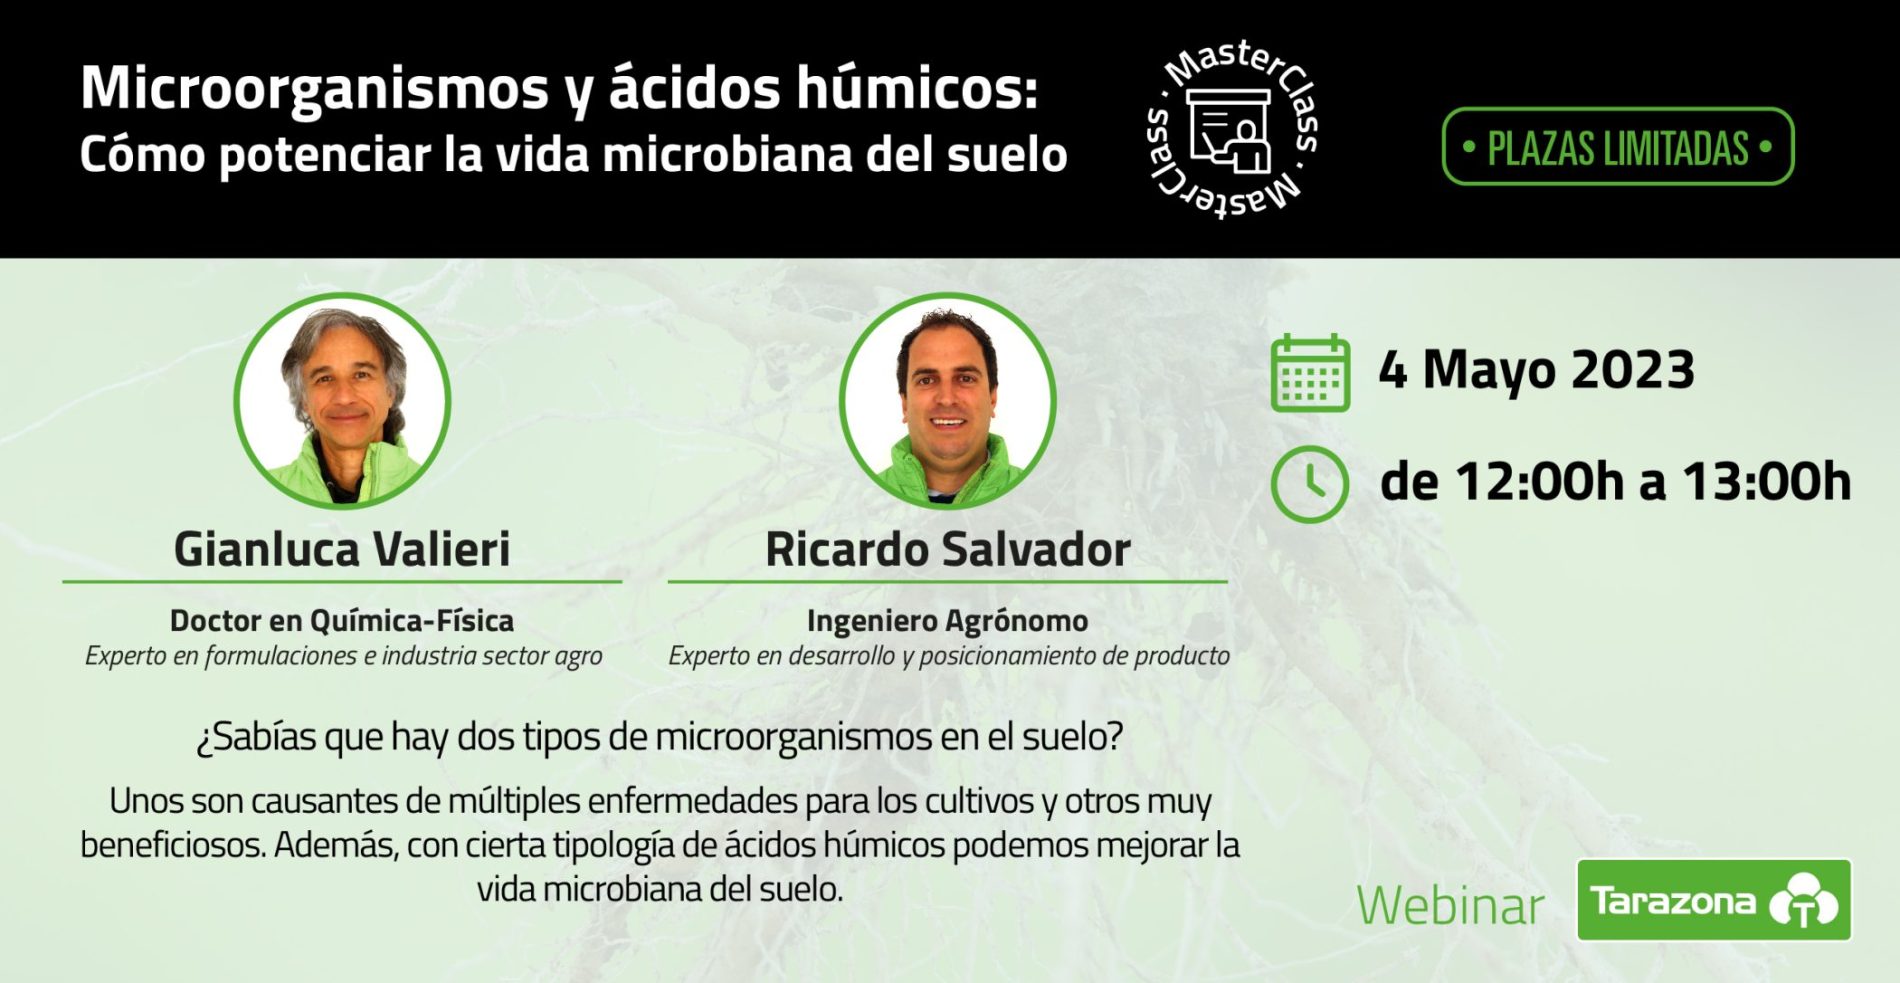 webinar microorganismos y acidos humicos_tarazona